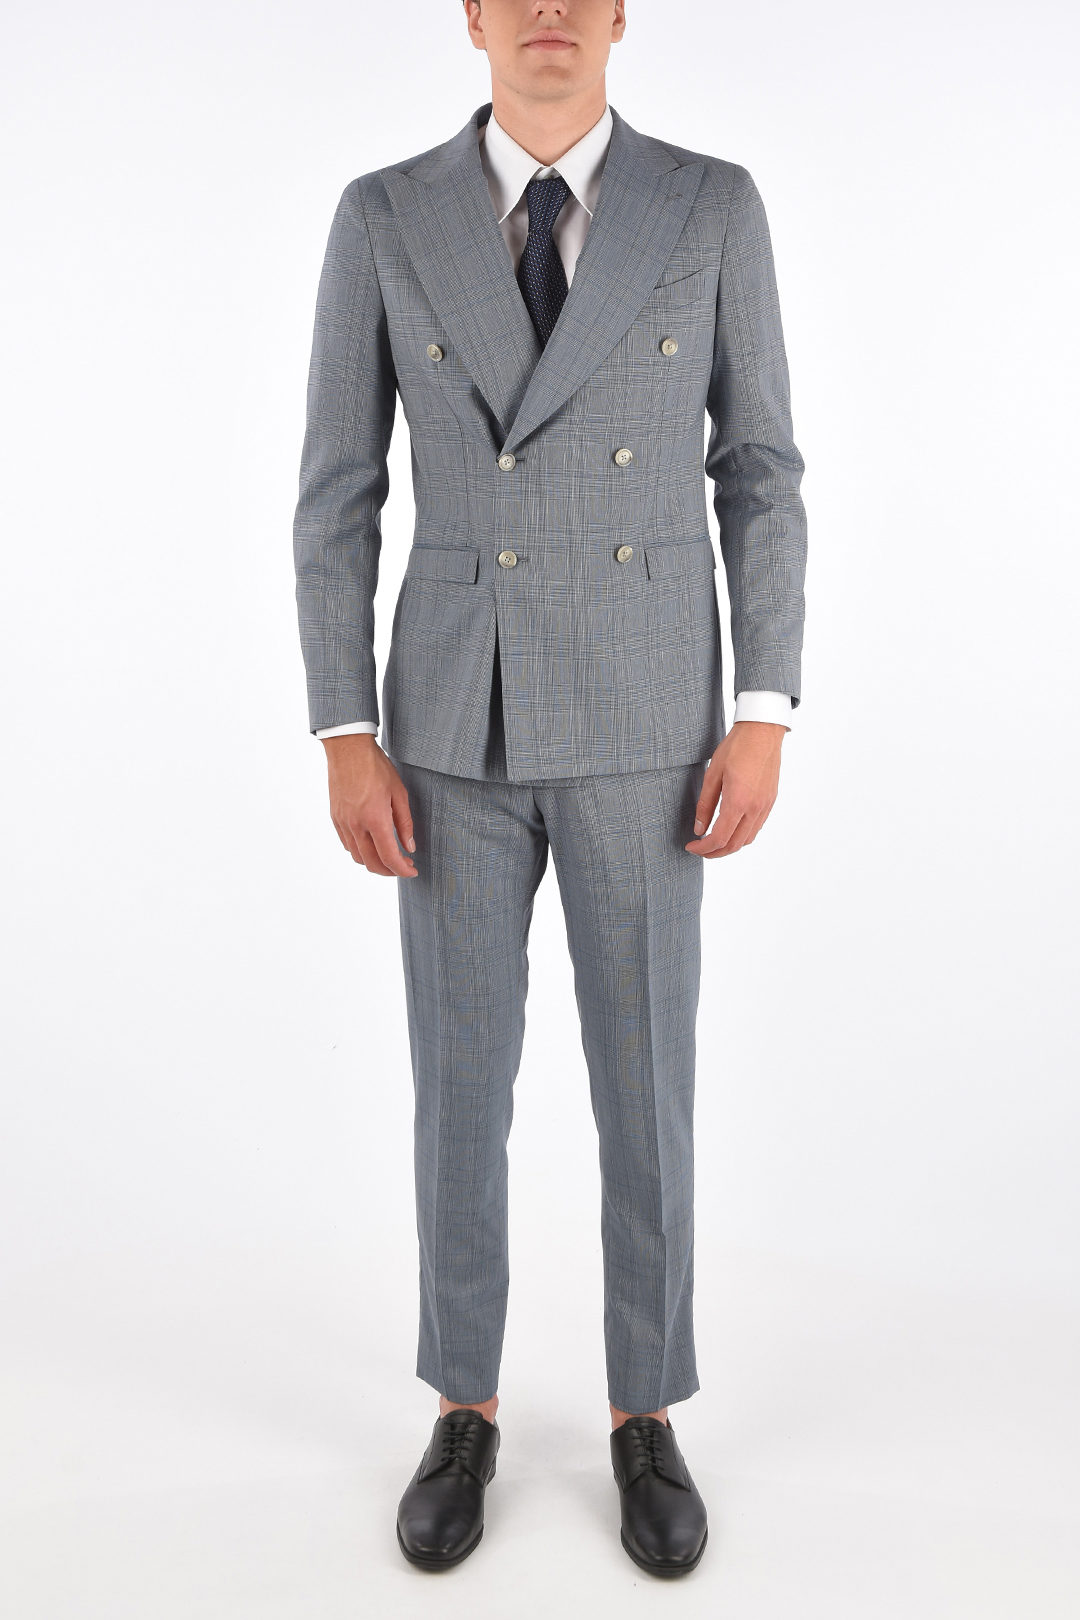 CC COLLECTION virgin wool REWARD side vents peak lapel 3-button double  breasted suit